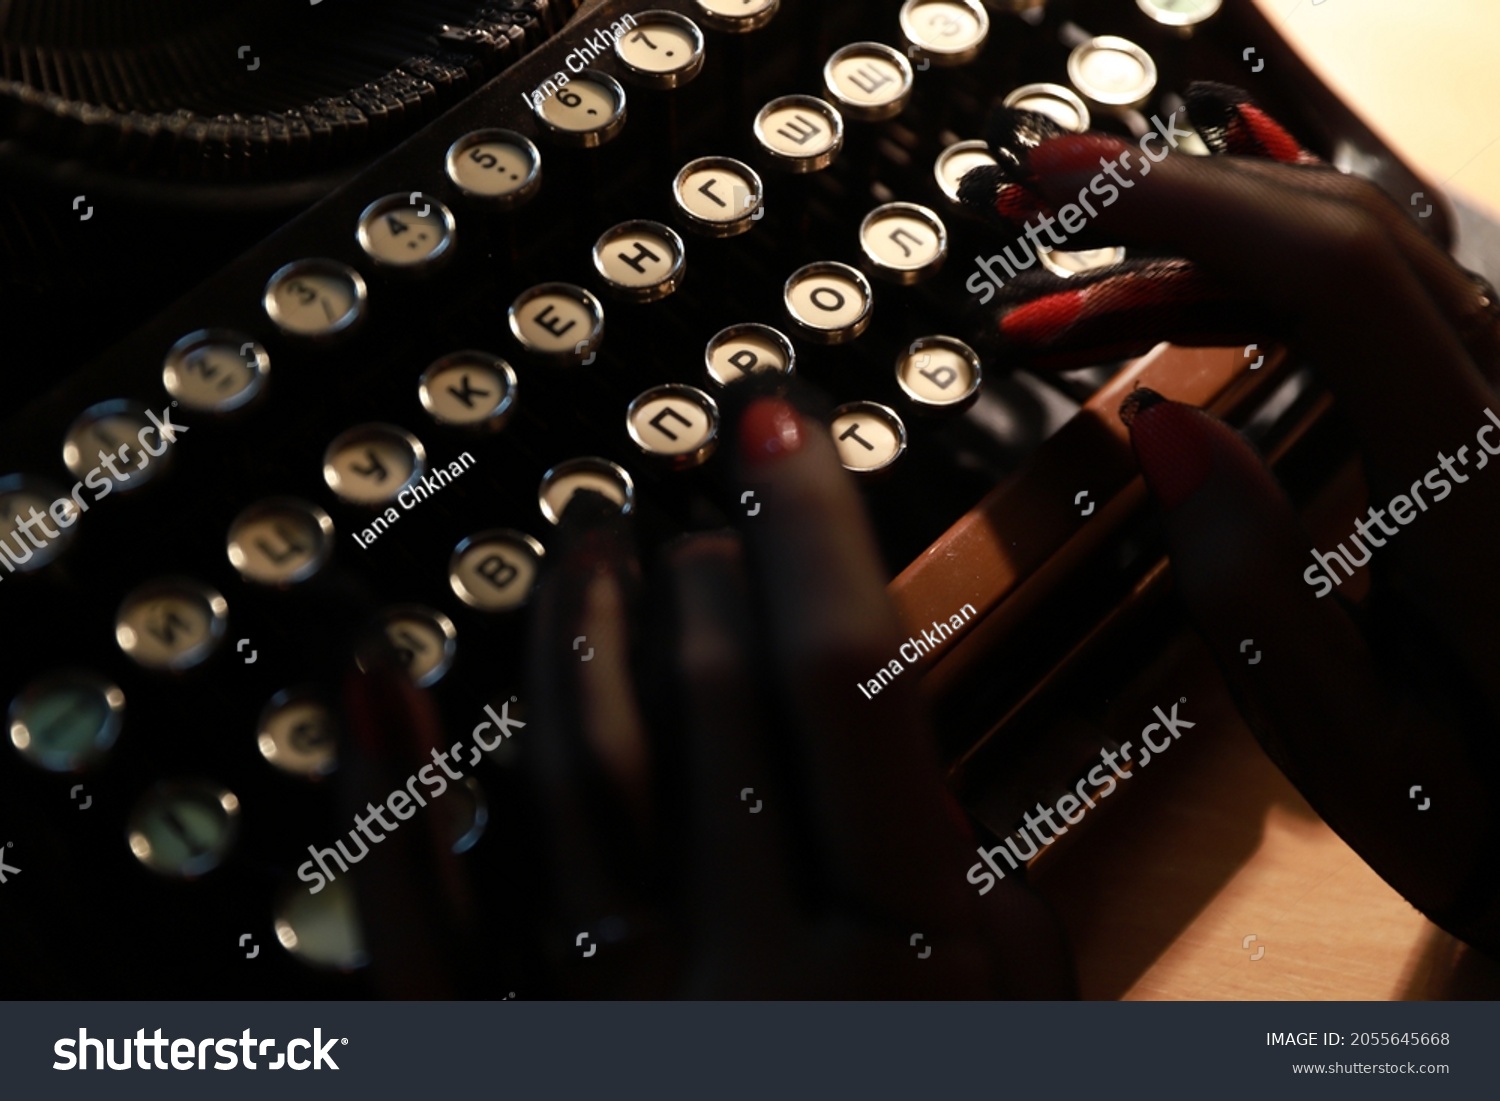 Typewriter mechanism, hands on a printed bag, light from a lamp, sheet of paper, typewriter, keys #2055645668